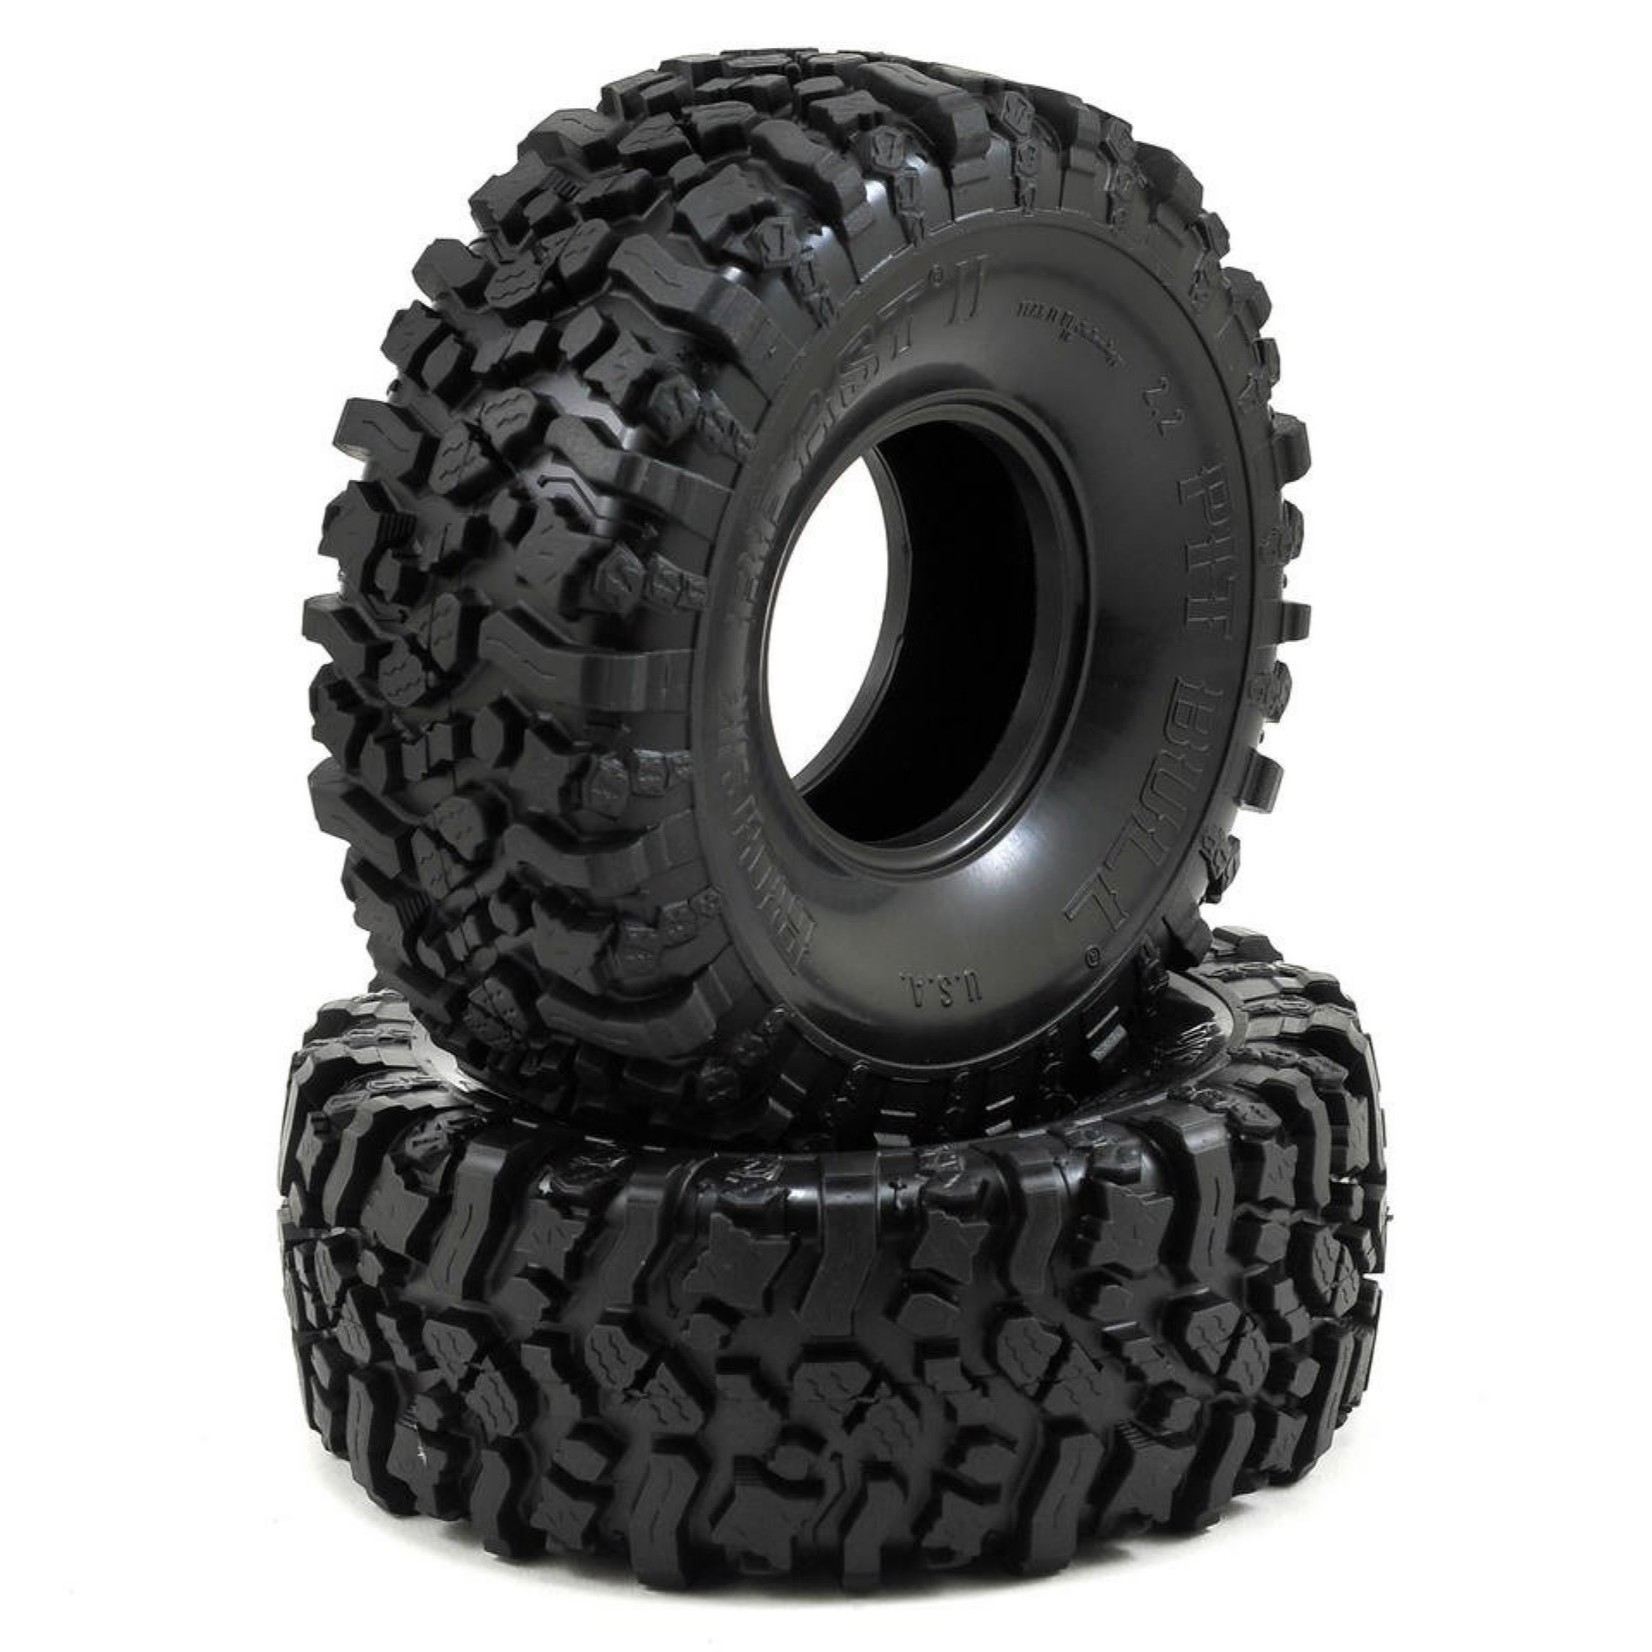 Pit Bull Pit Bull Tires Rock Beast II 2.2" Scale Rock Crawler Tires (2) (No Foam) (Komp) #PB9002NK